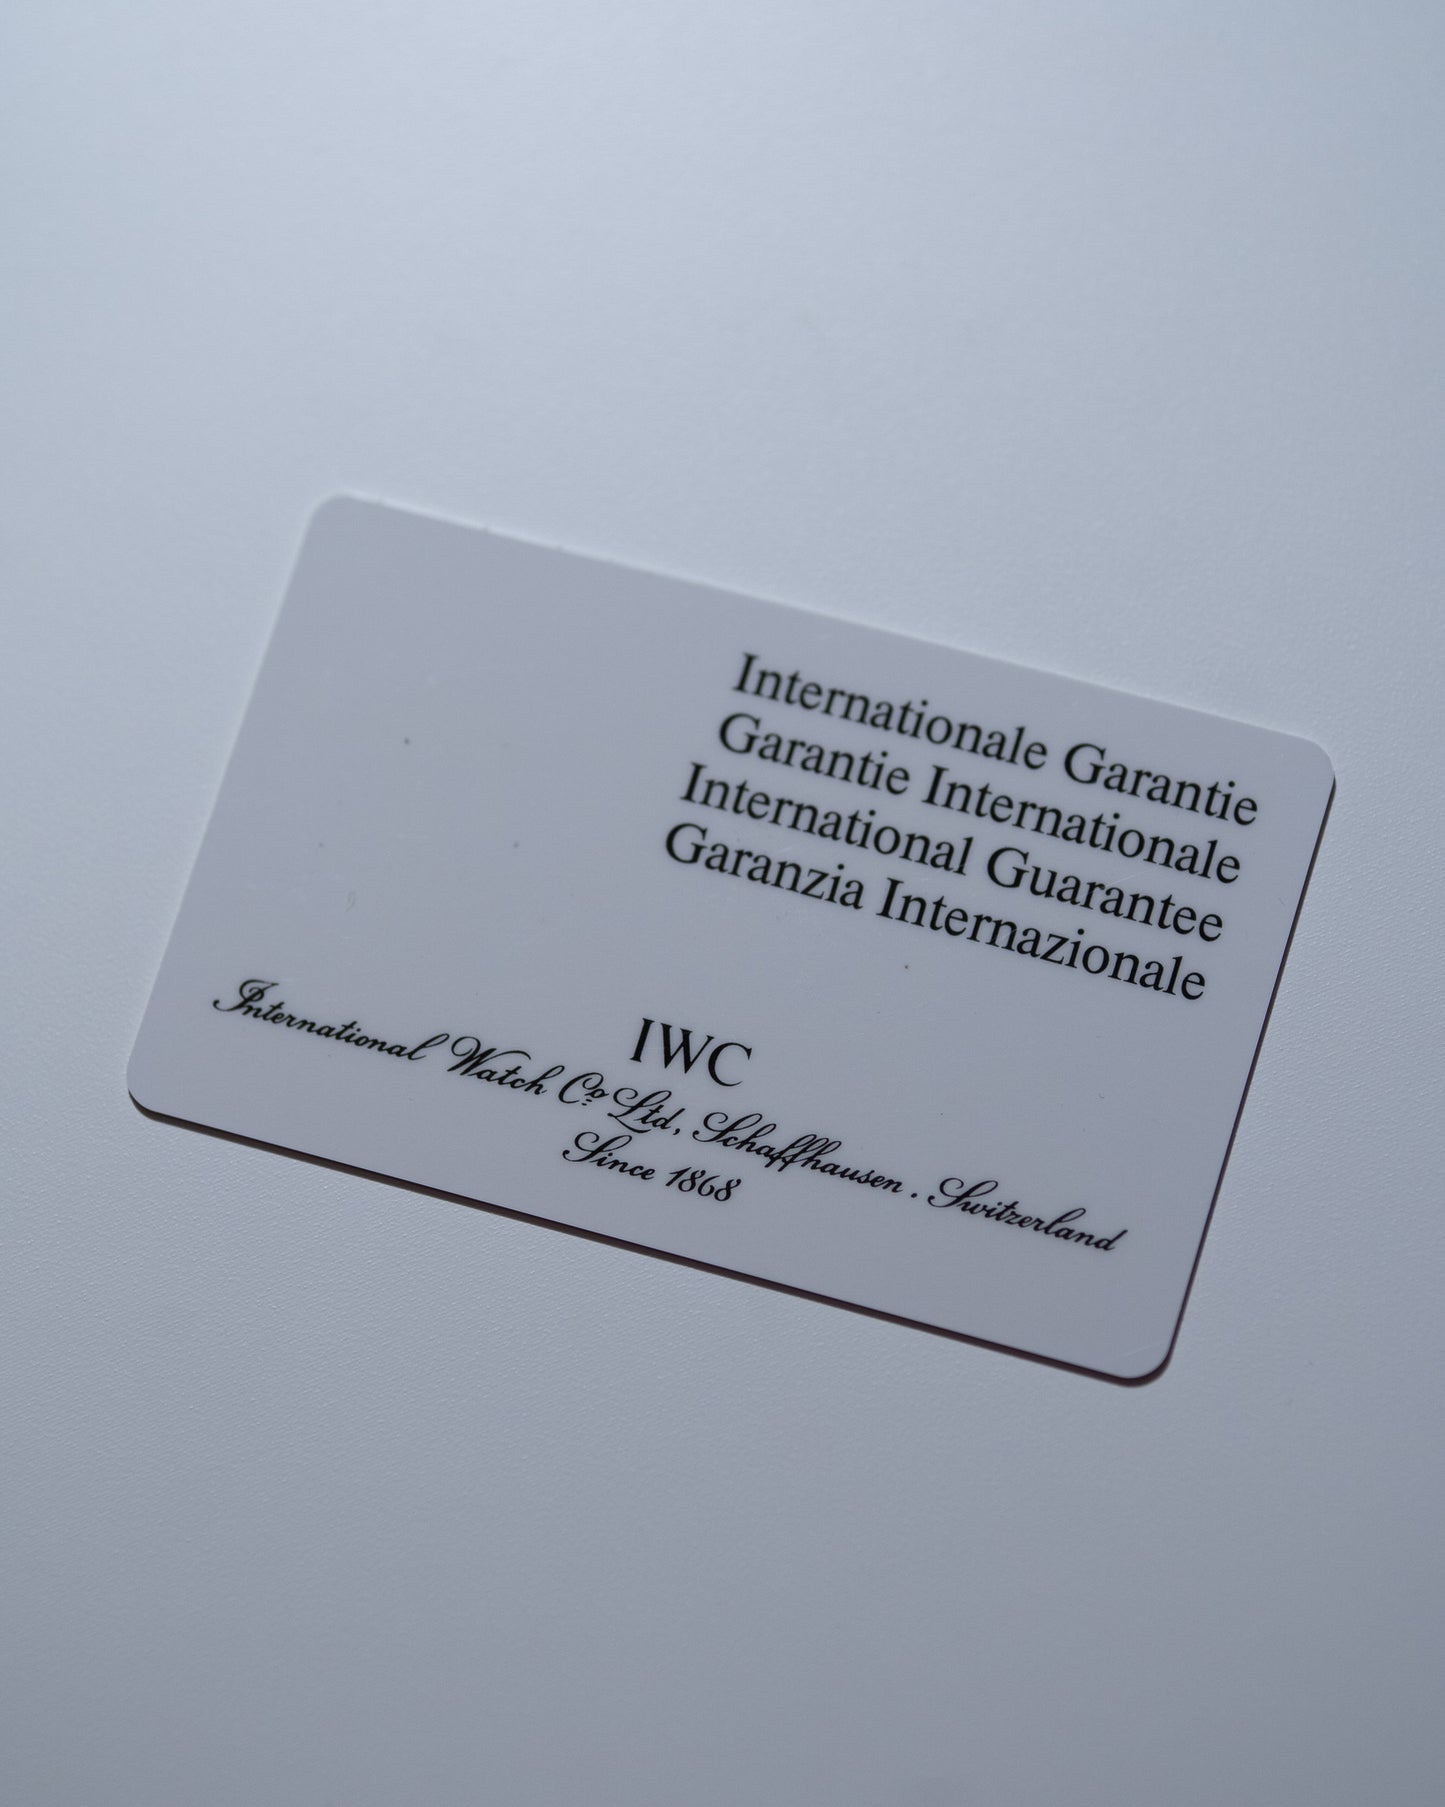 IWC Fliegerchronograph ref. 3741 mecha-quartz with guarantee card